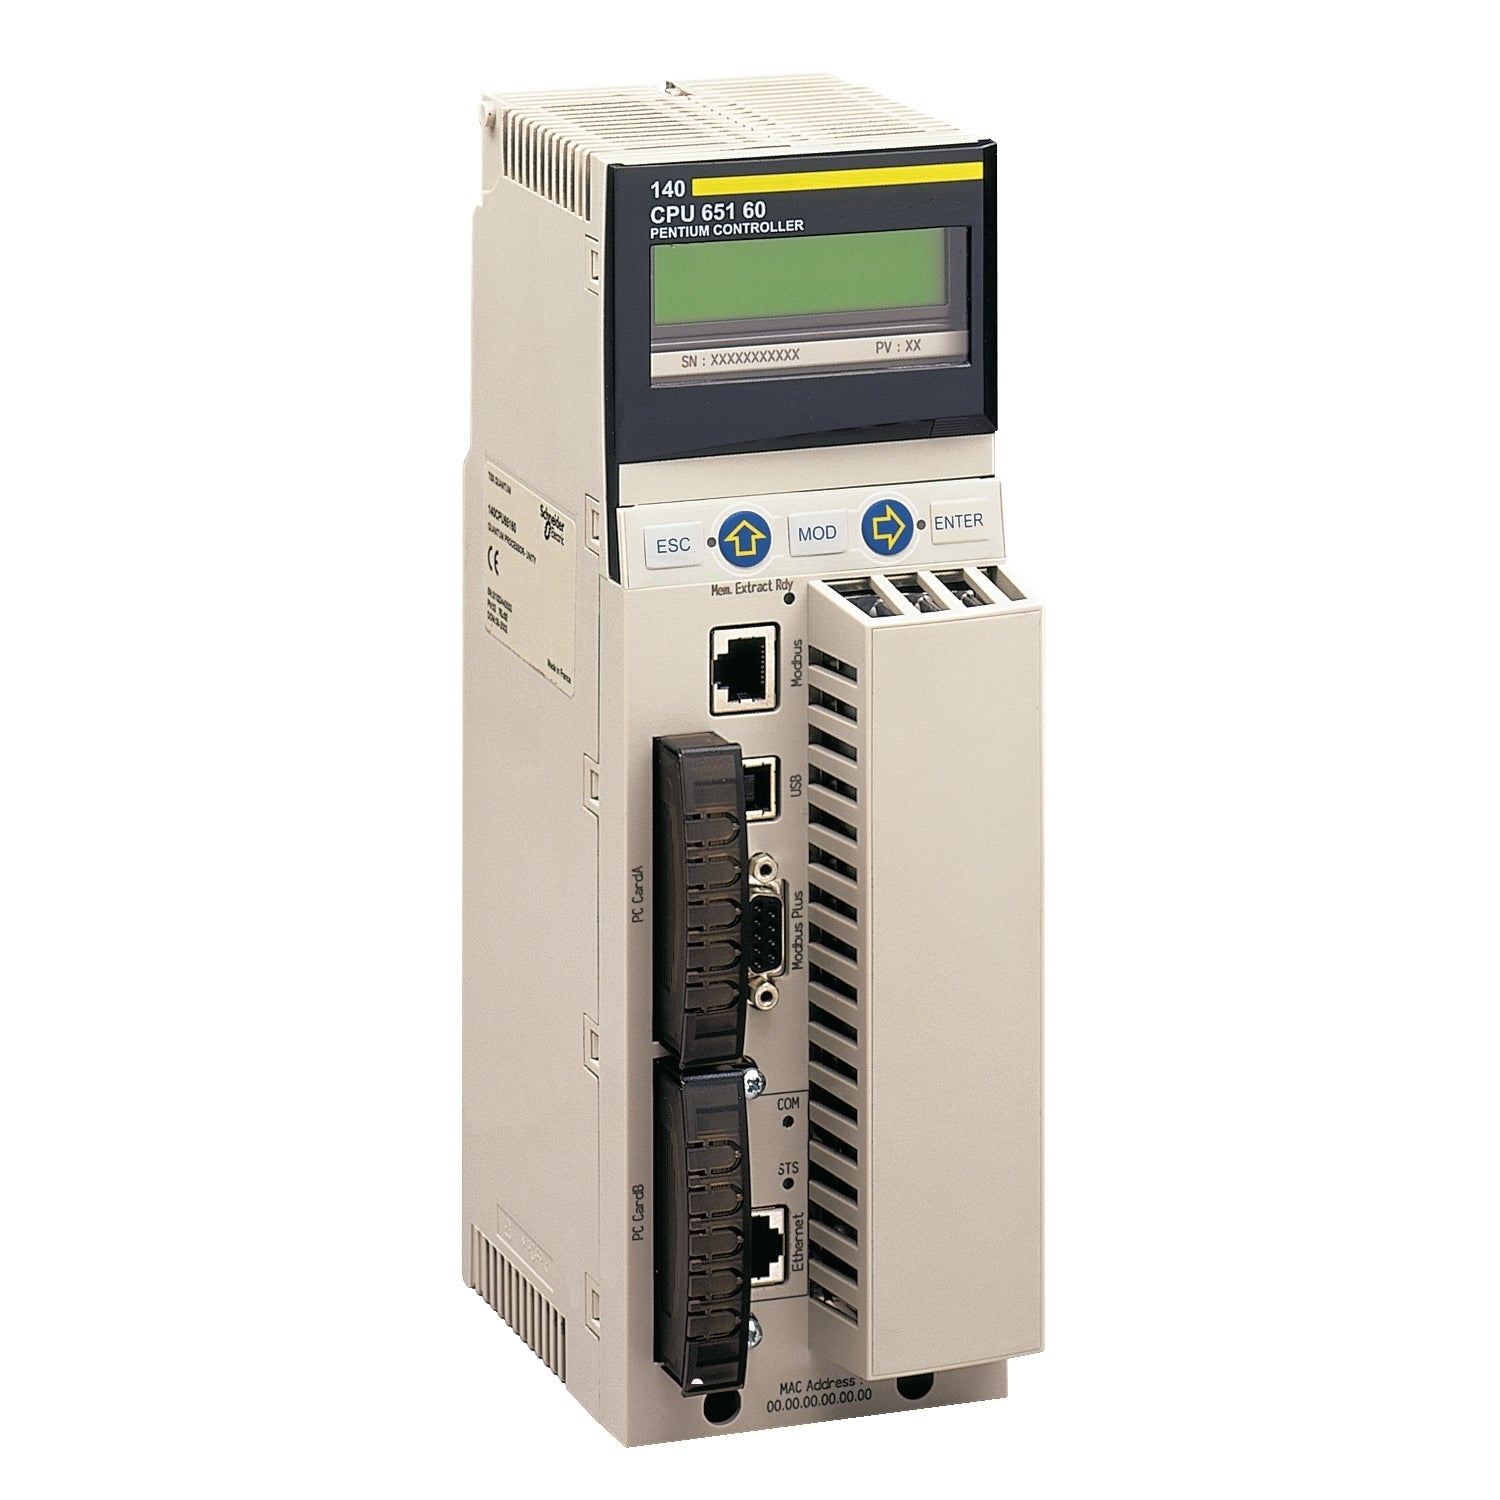 140CPU65150 | Schneider Electric | Unity processor